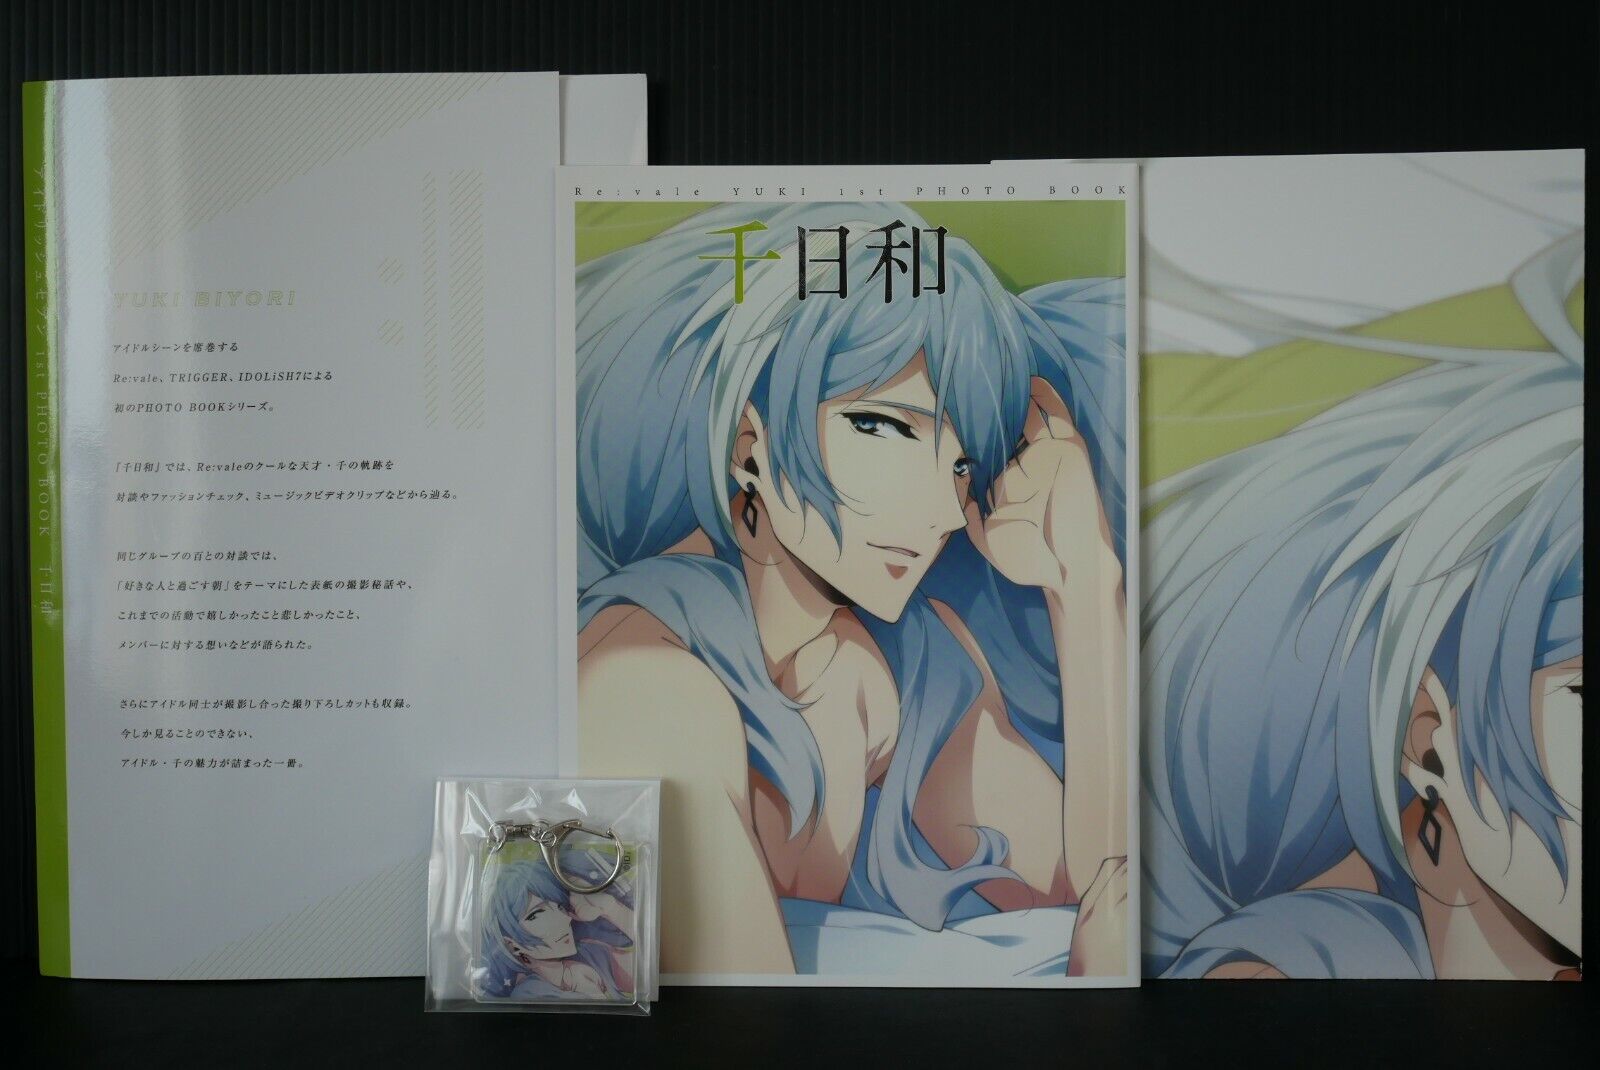 Idolish 7 Re:vale Yuki 1st Photo Book W/Poster,Booklet,Key Holder